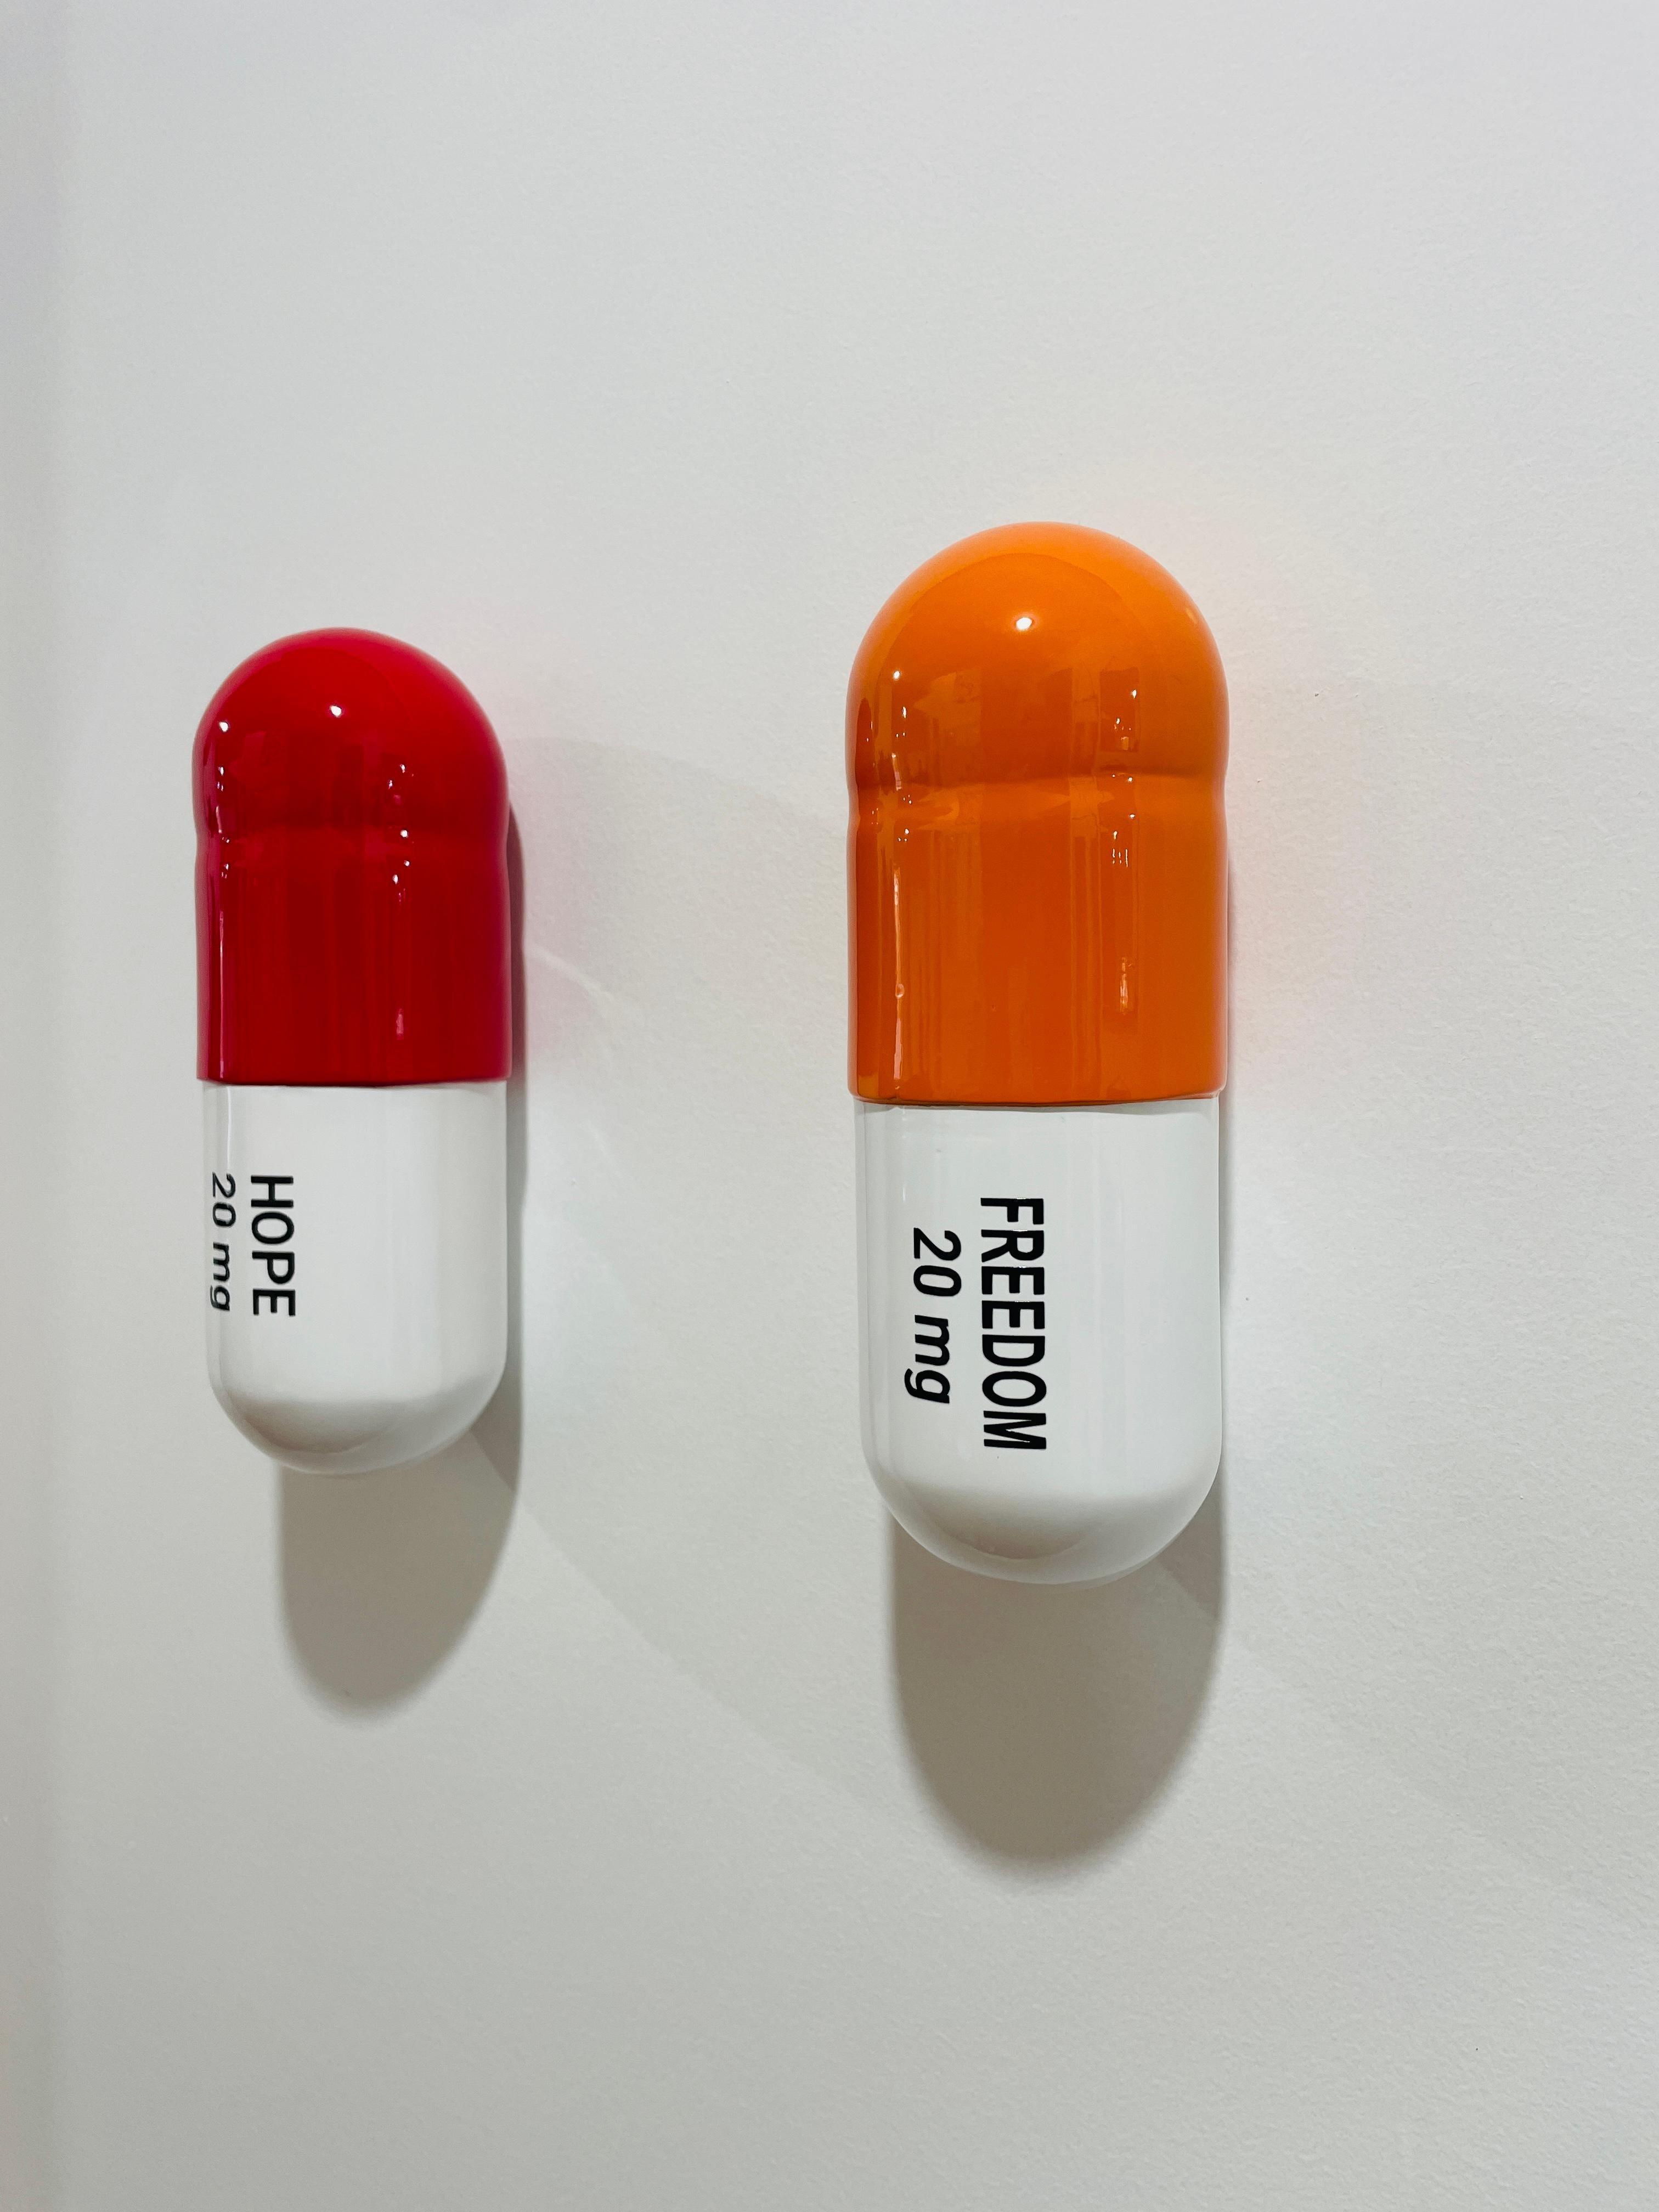 20 MG Hope pill Combo (rouge, orange, blanc) - sculpture figurative - Pop Art Sculpture par Tal Nehoray